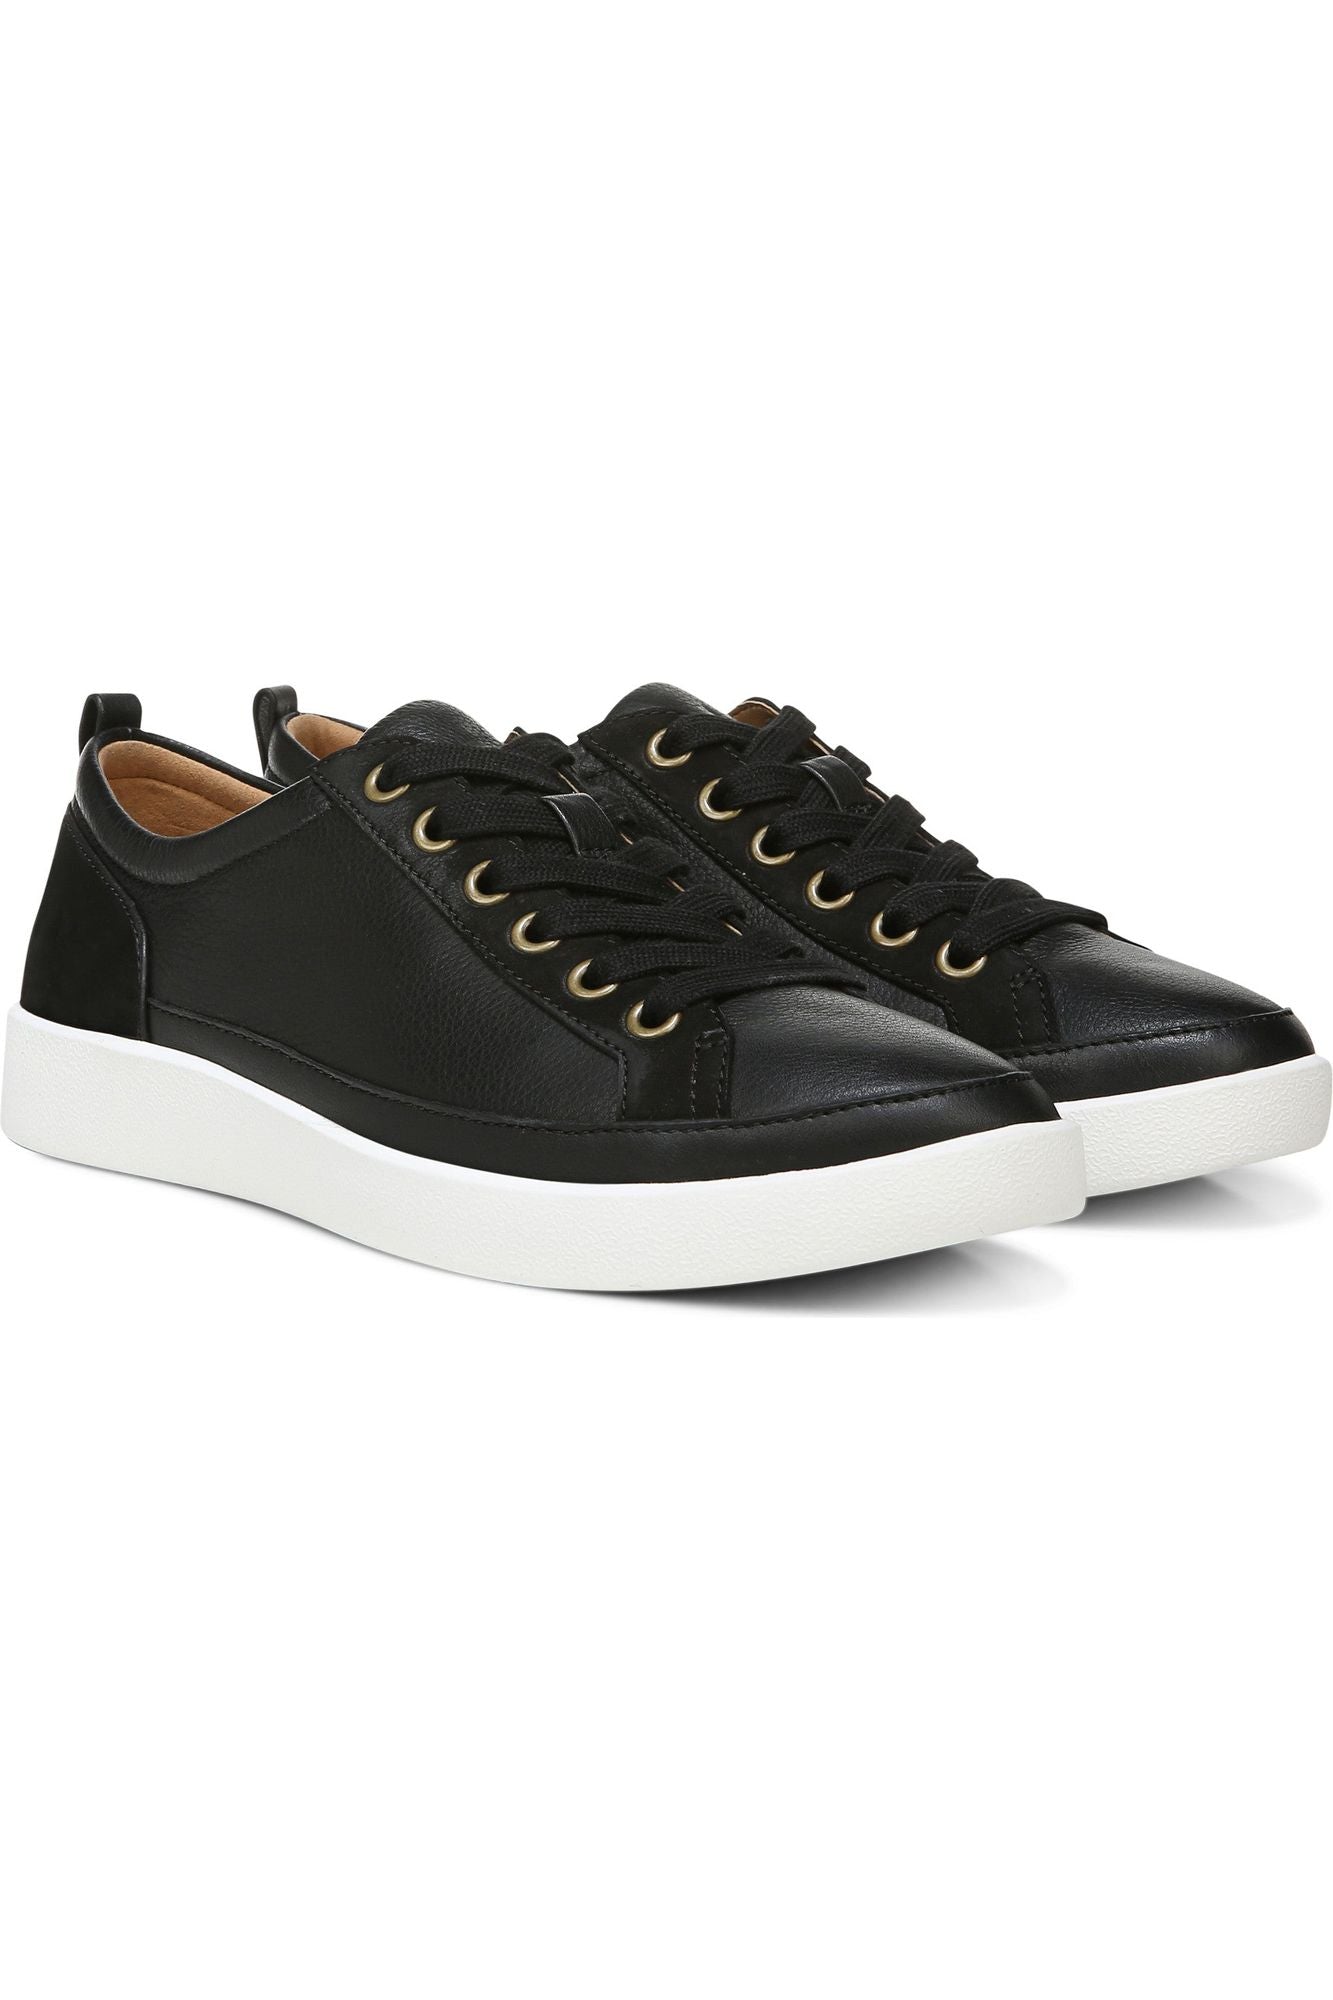 Vionic Essence Lace-Up Fashion Sneaker - Style WINNY, pair2, black